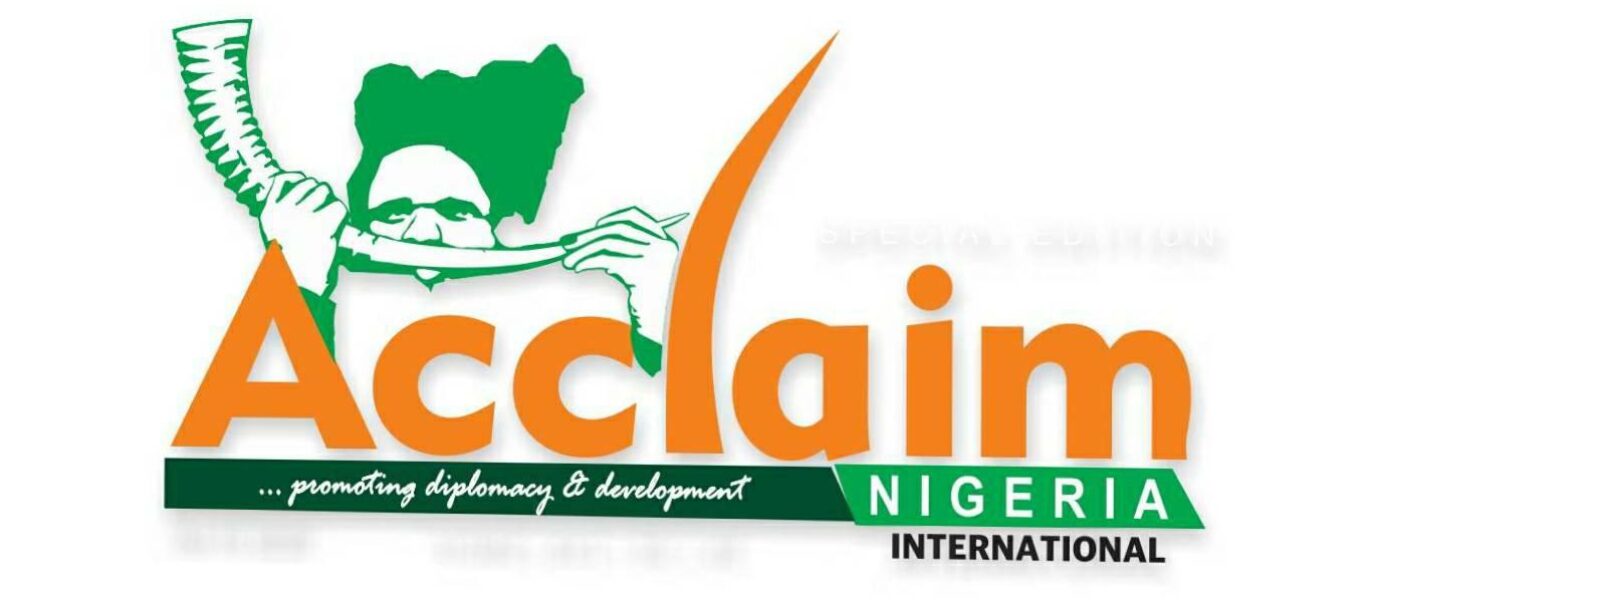 Acclaim Nigeria International Magazine (ANIM)